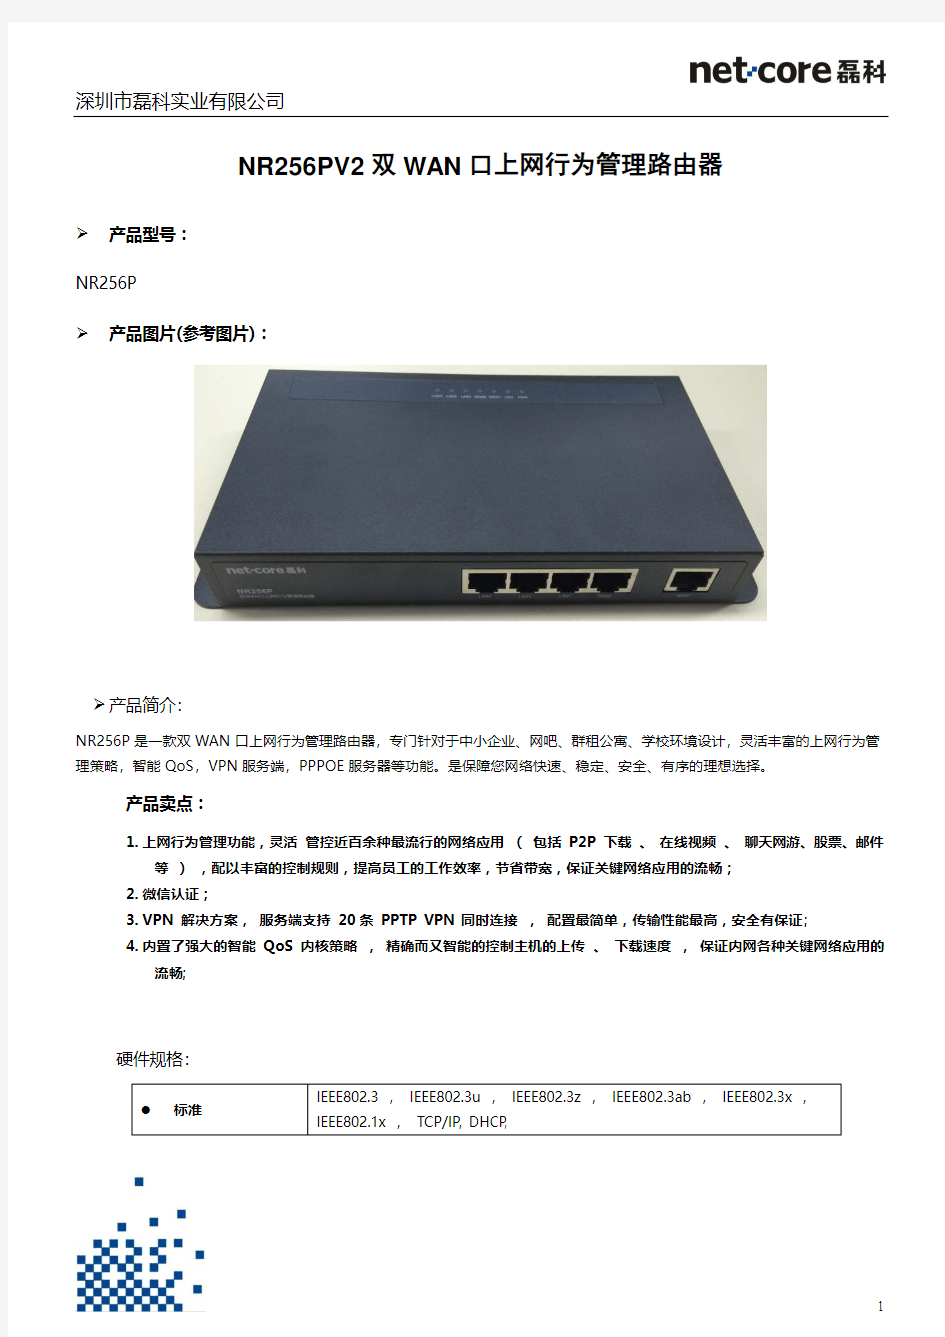 NR256PV2双WAN口上网行为管理路由器-磊科